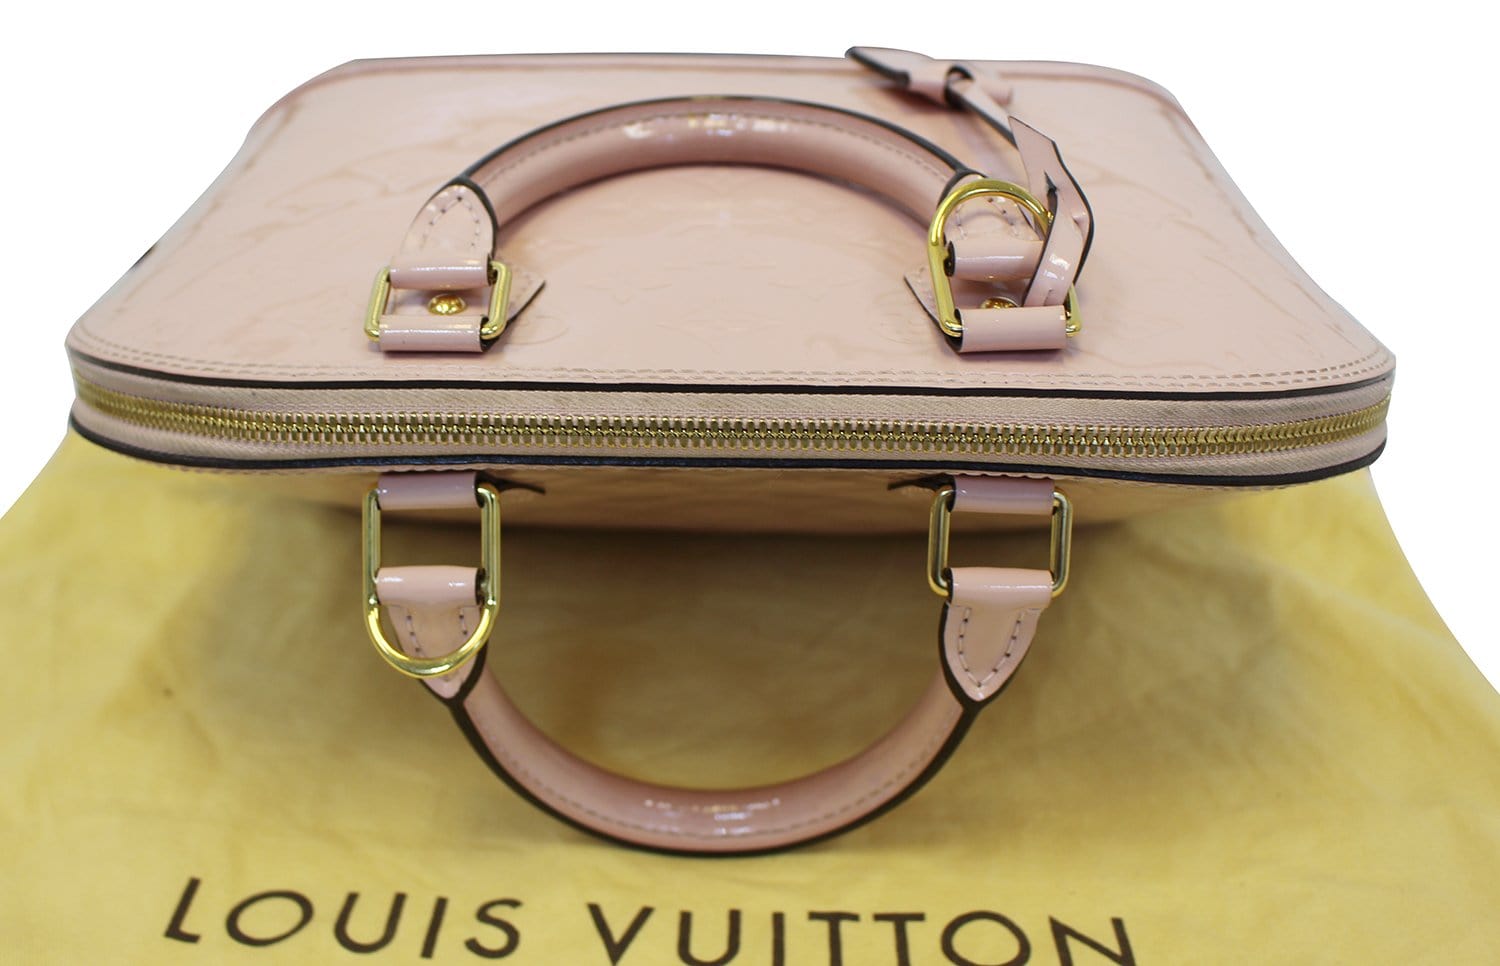 LOUIS VUITTON Vernis Leather Alma PM Rose Ballerine Satchel Bag